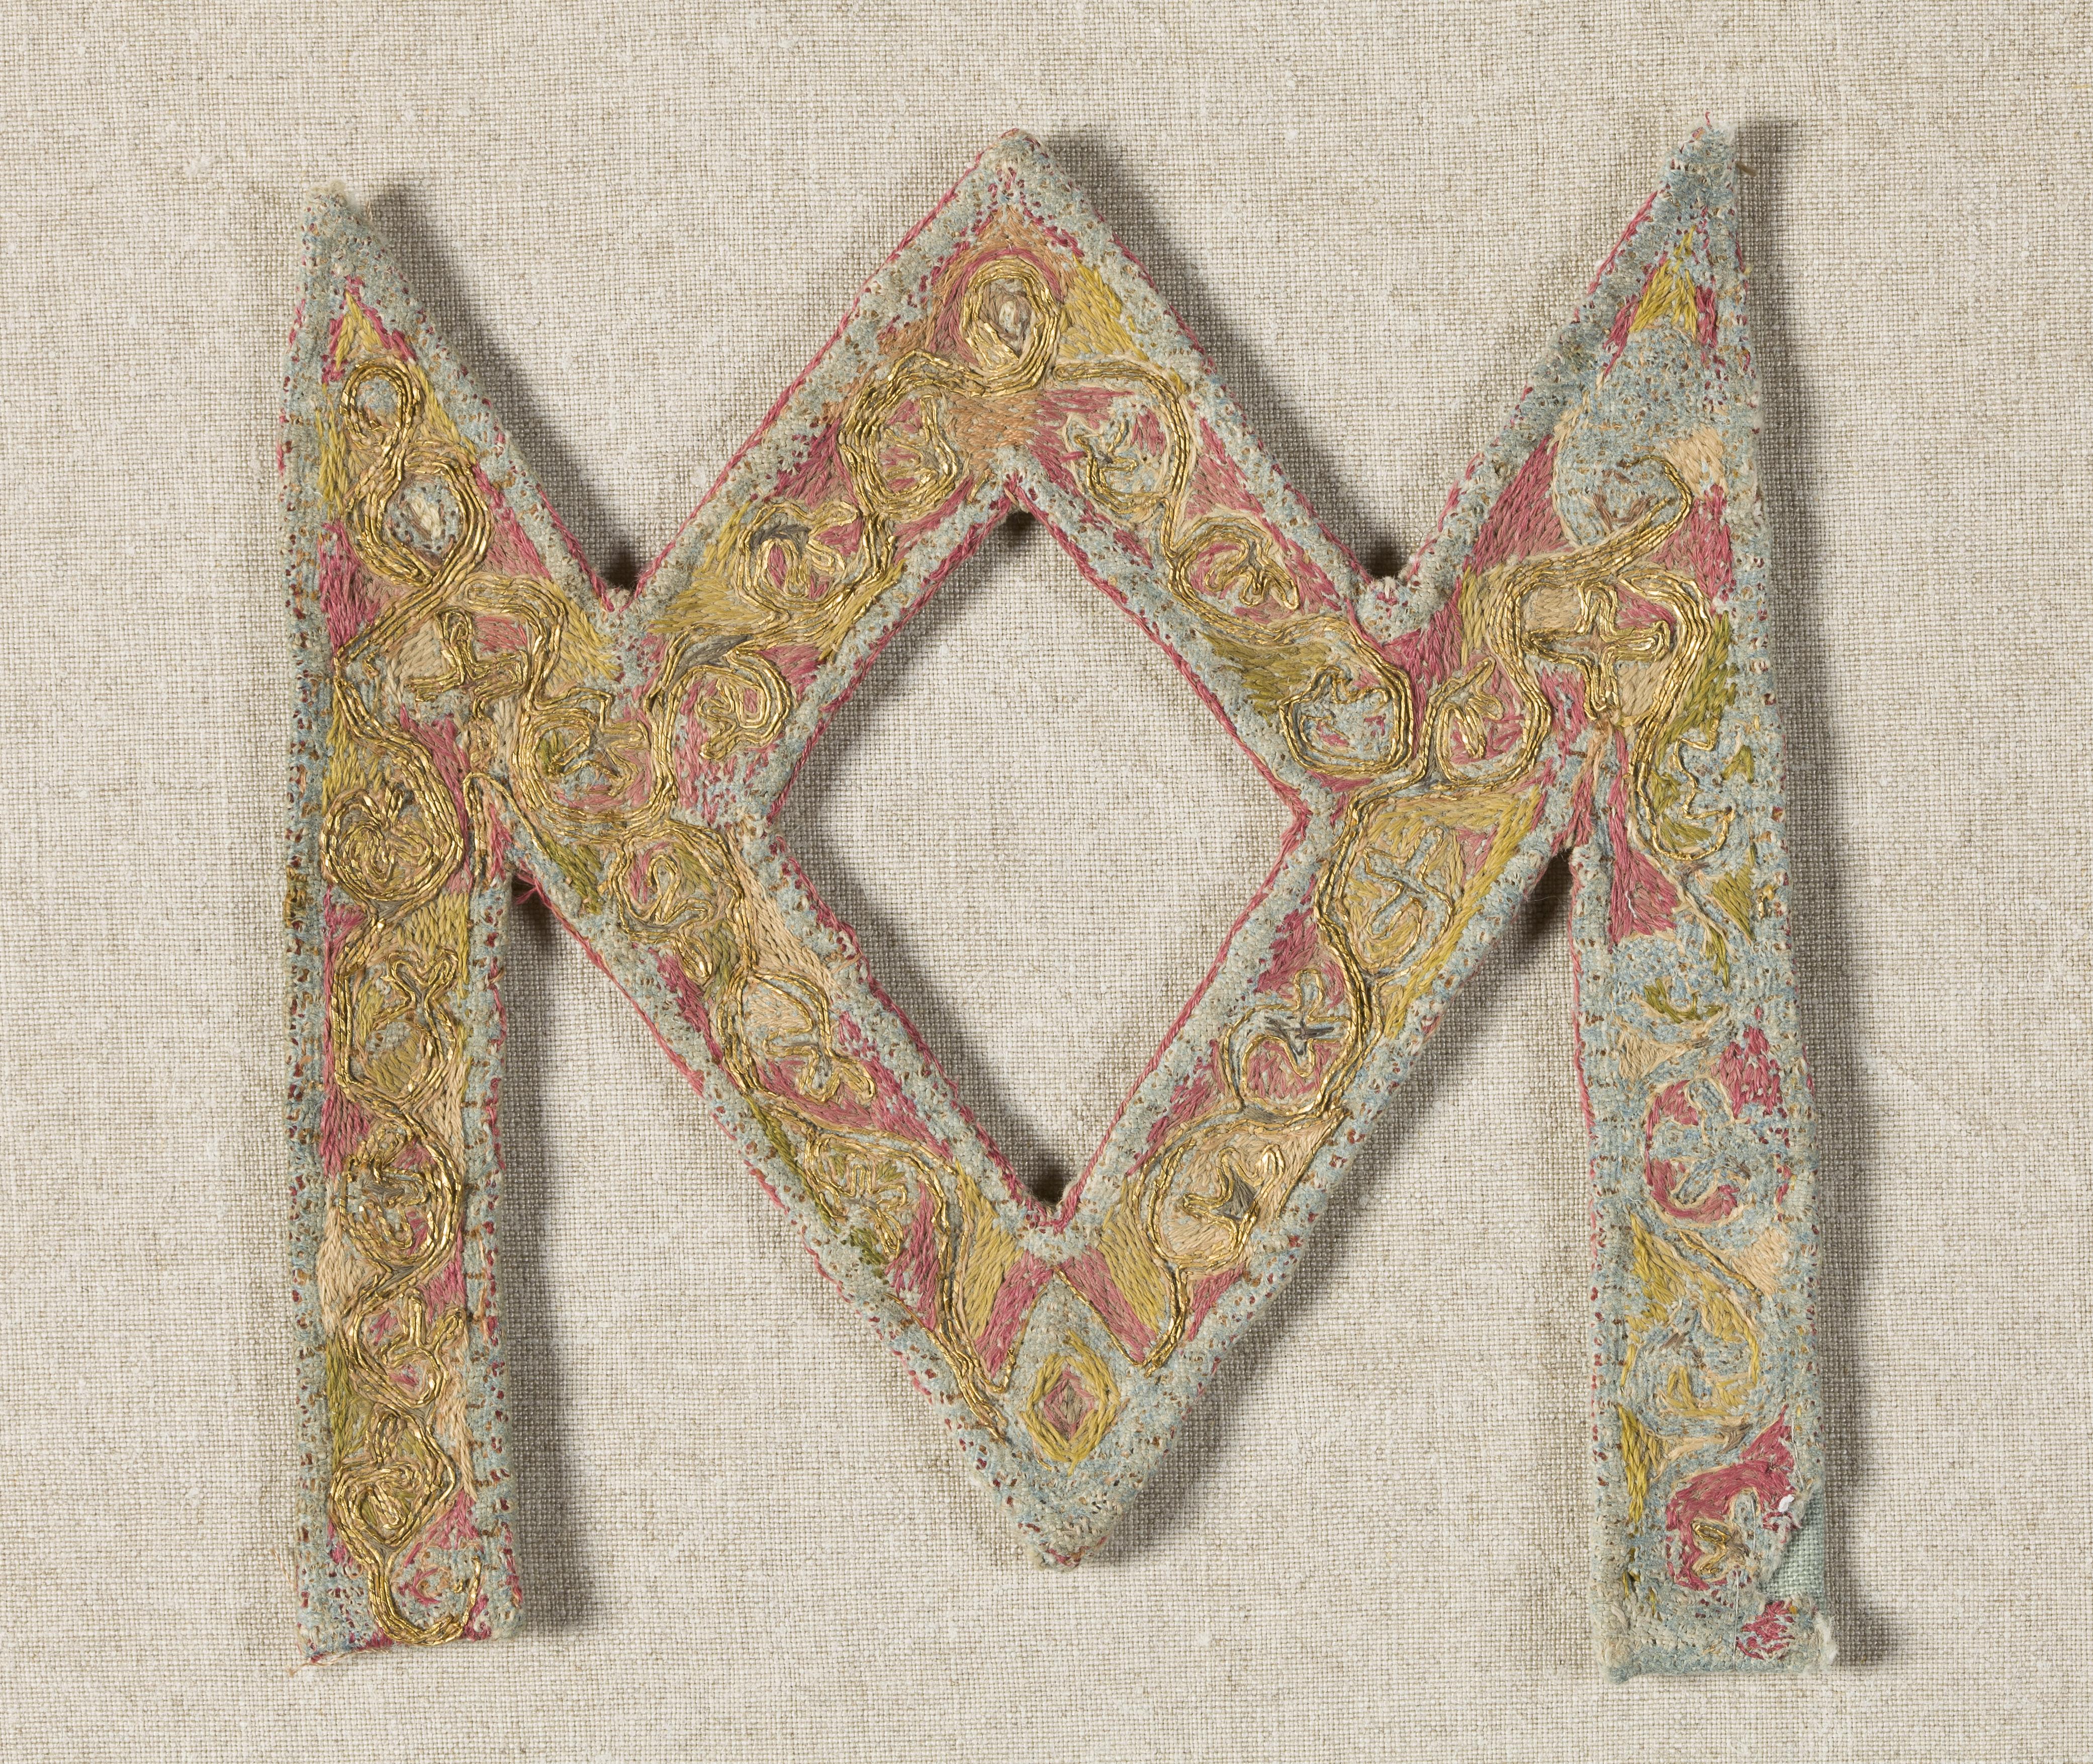 Textilia monogram musea maaseik